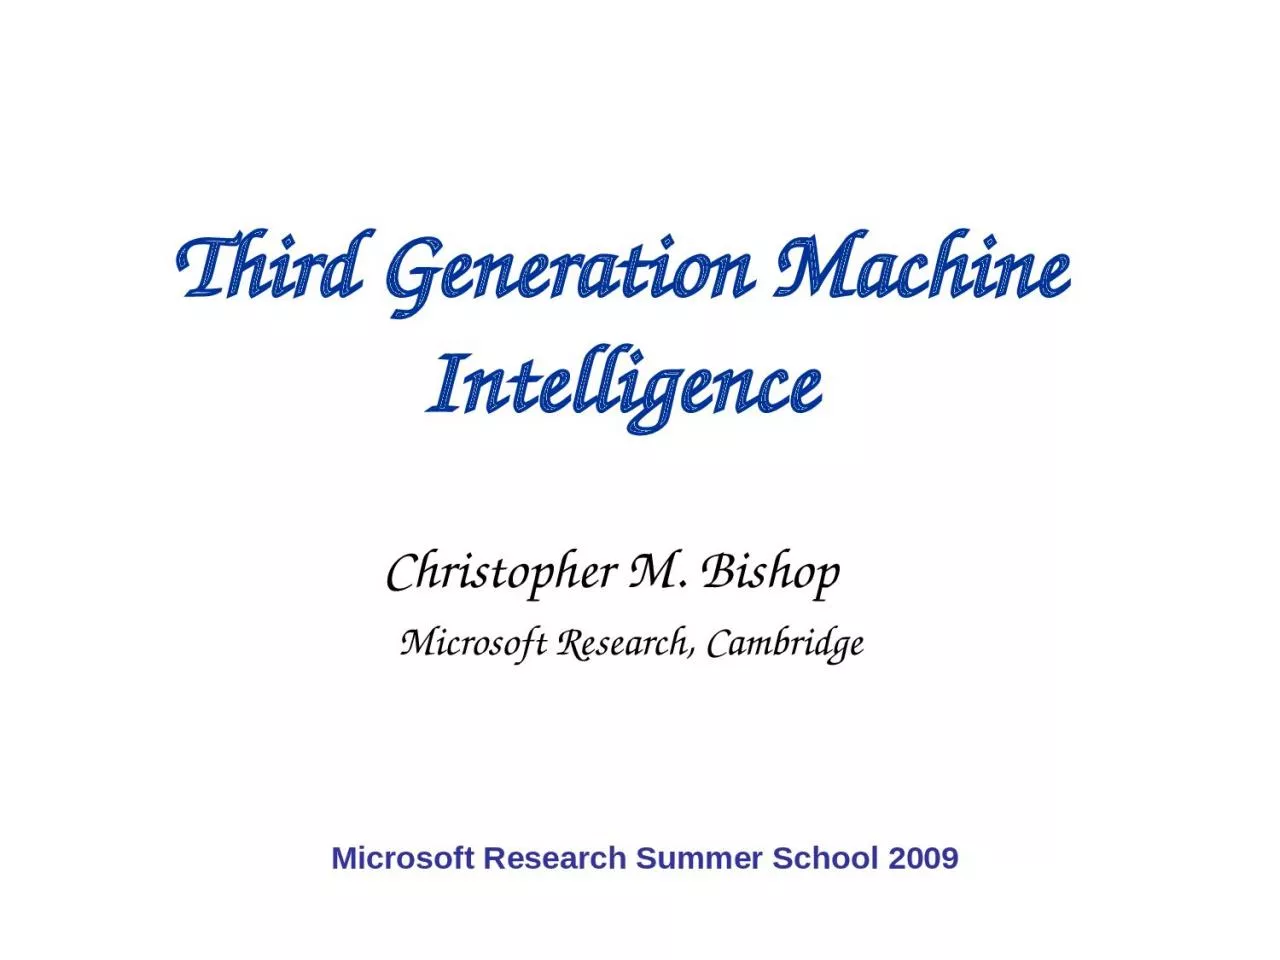 Third Generation Machine Intelligence